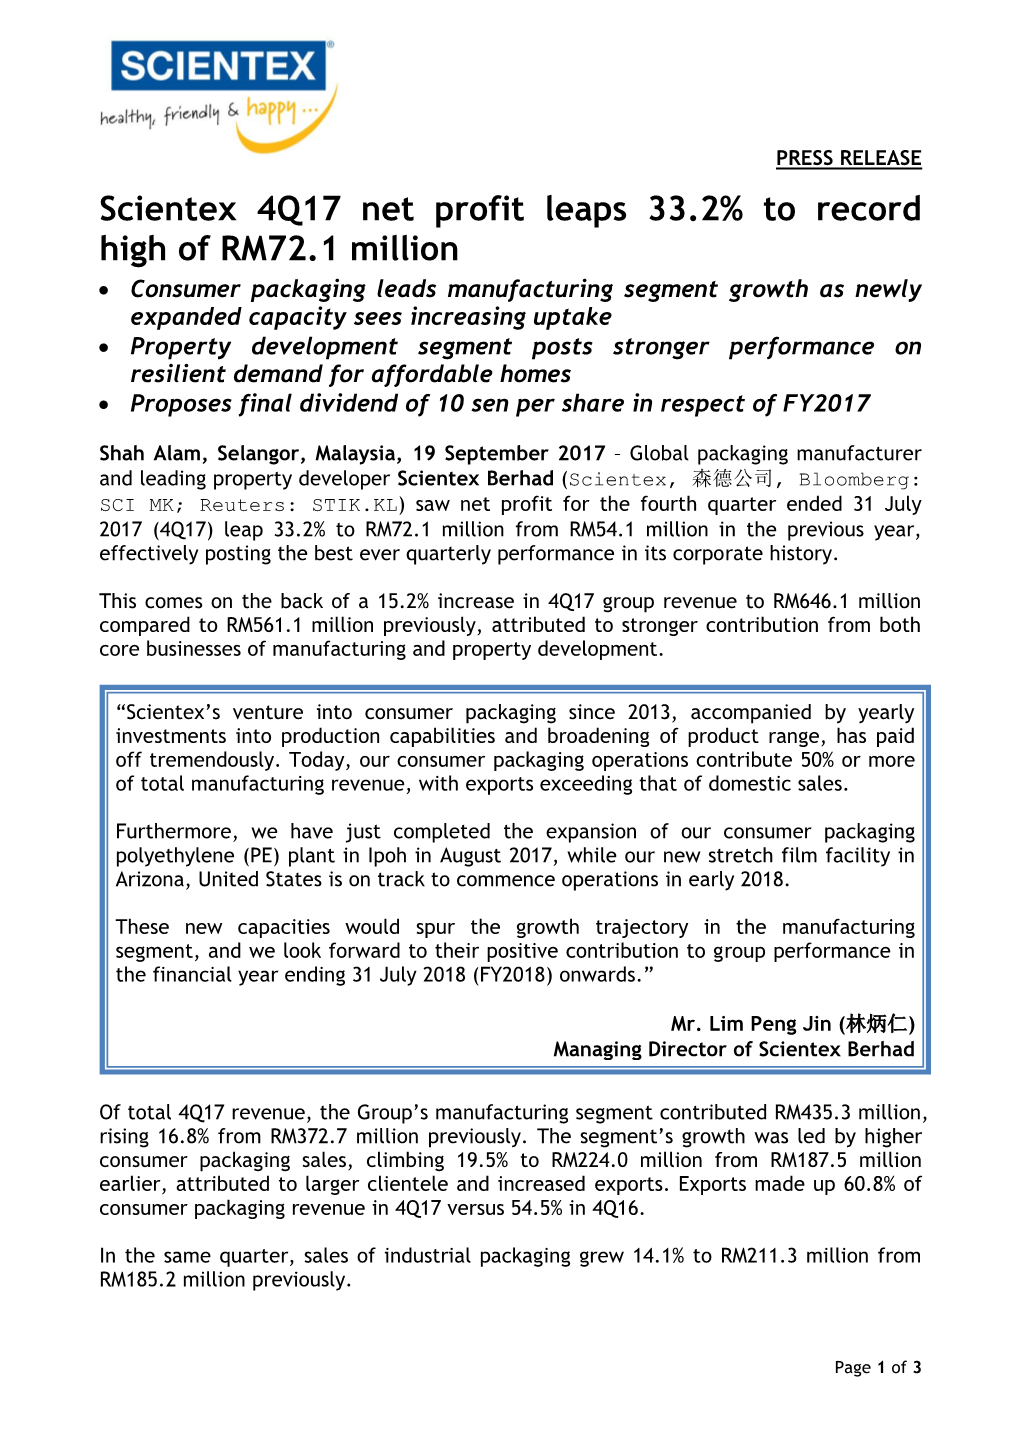 Scientex 4Q17 Net Profit Leaps 33.2% to Record High Of